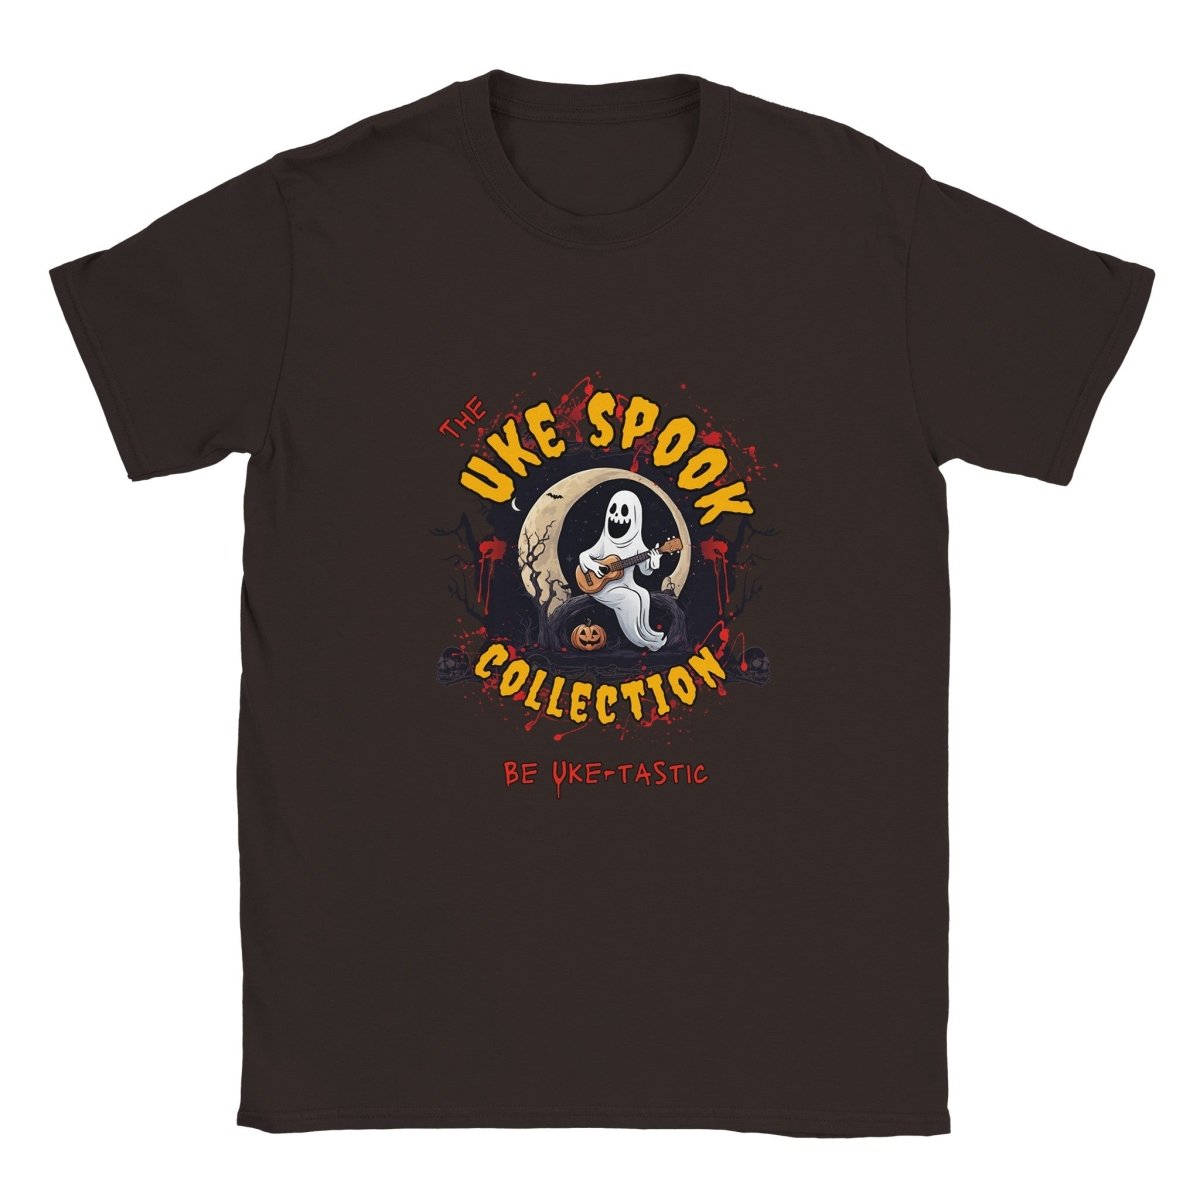 Uke Spook Ghost - Classic Unisex Crewneck T-shirt - Uke Tastic - Dark Chocolate - Free Delivery - Uke Tastic